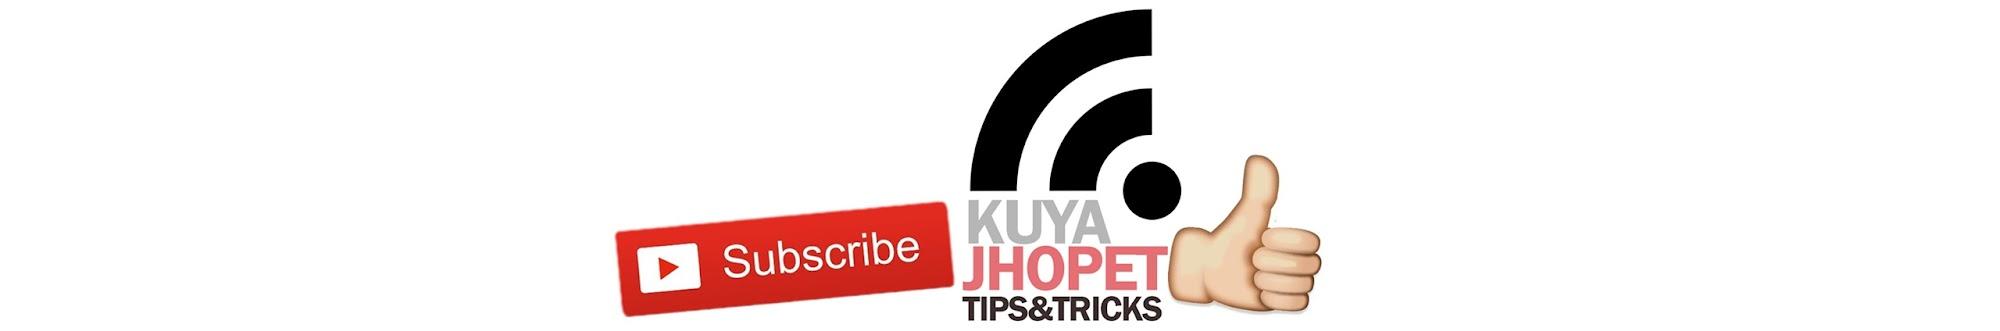 Kuya Jhopet Tips and Tricks